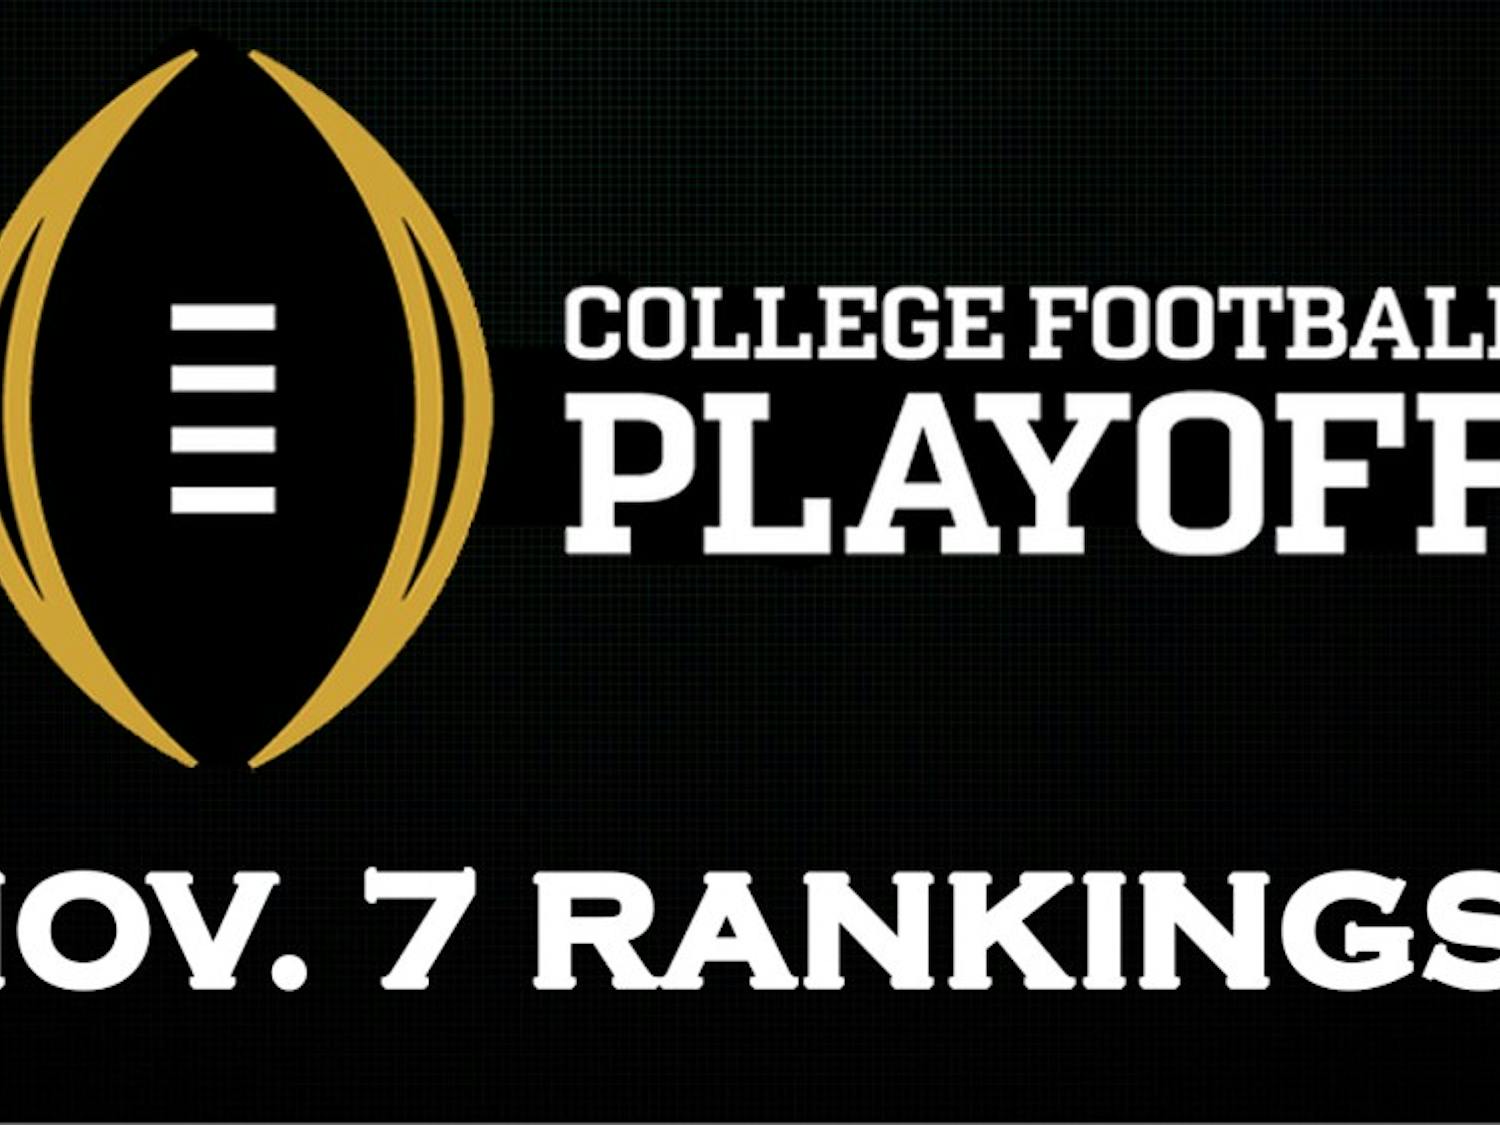 College Football Playoff rankings Nov. 7